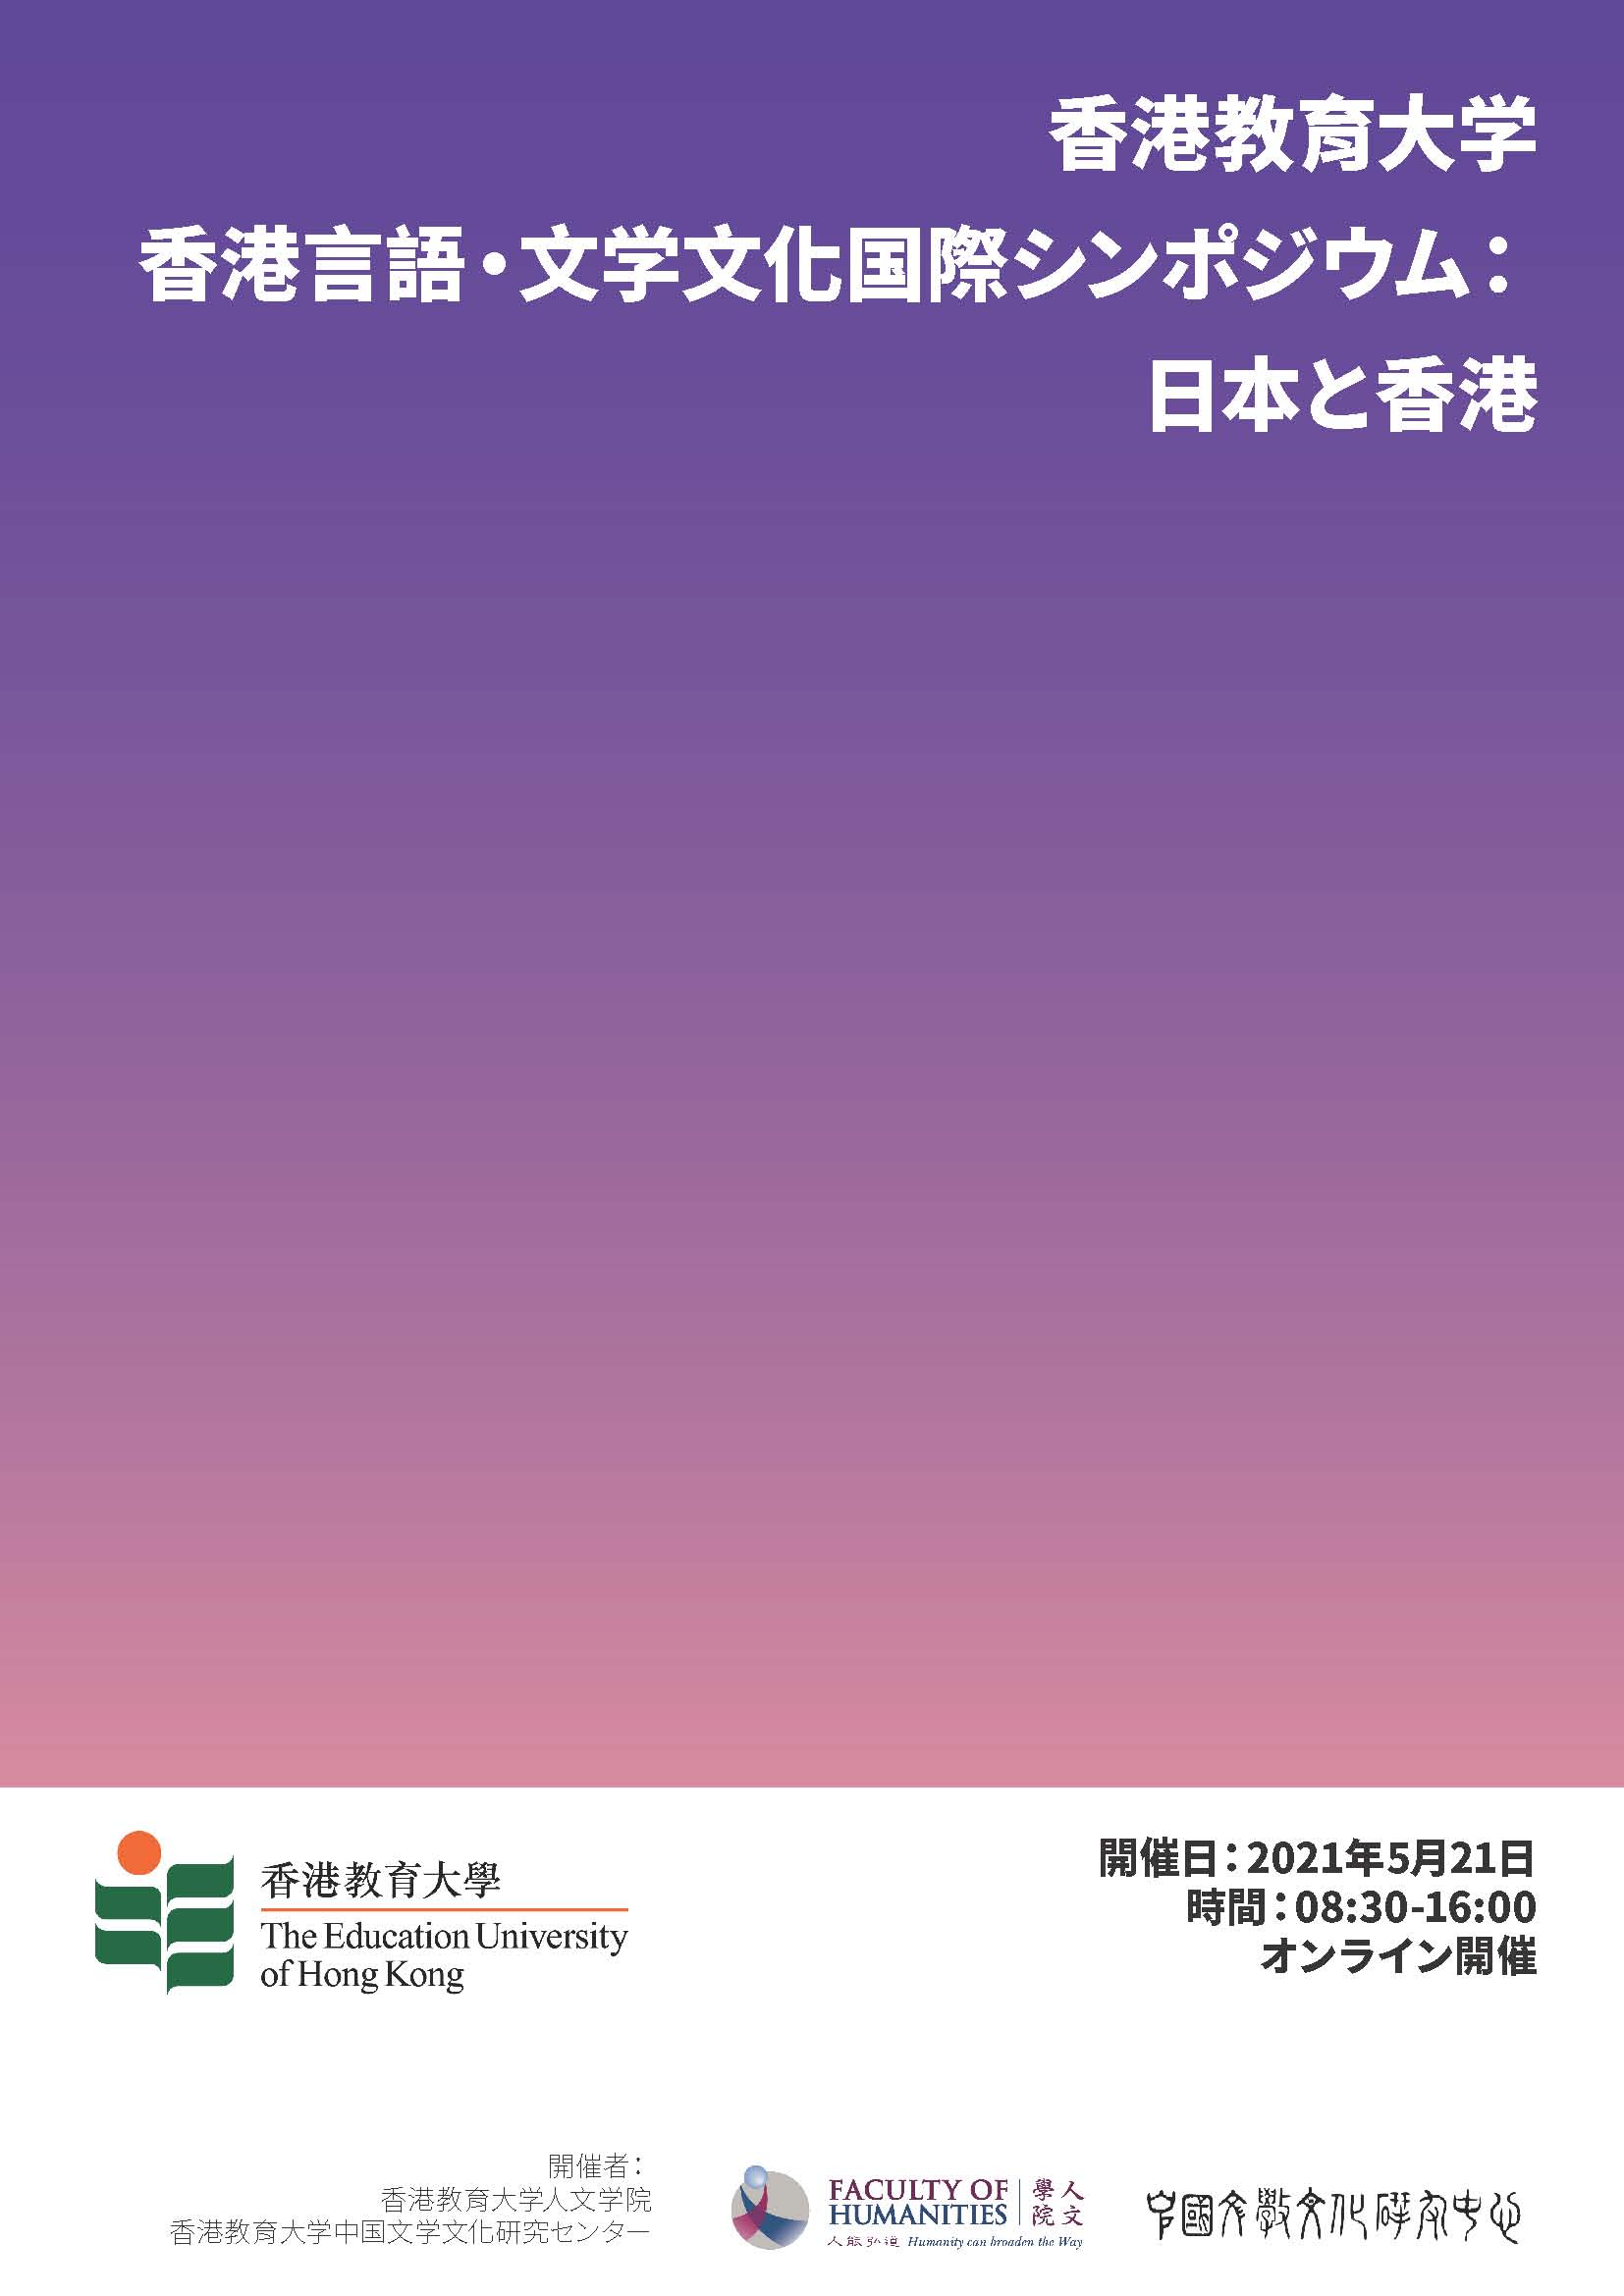 The cover of “International Symposium on Hong Kong Language and Literary Culture: Japan and Hong Kong” booklet.